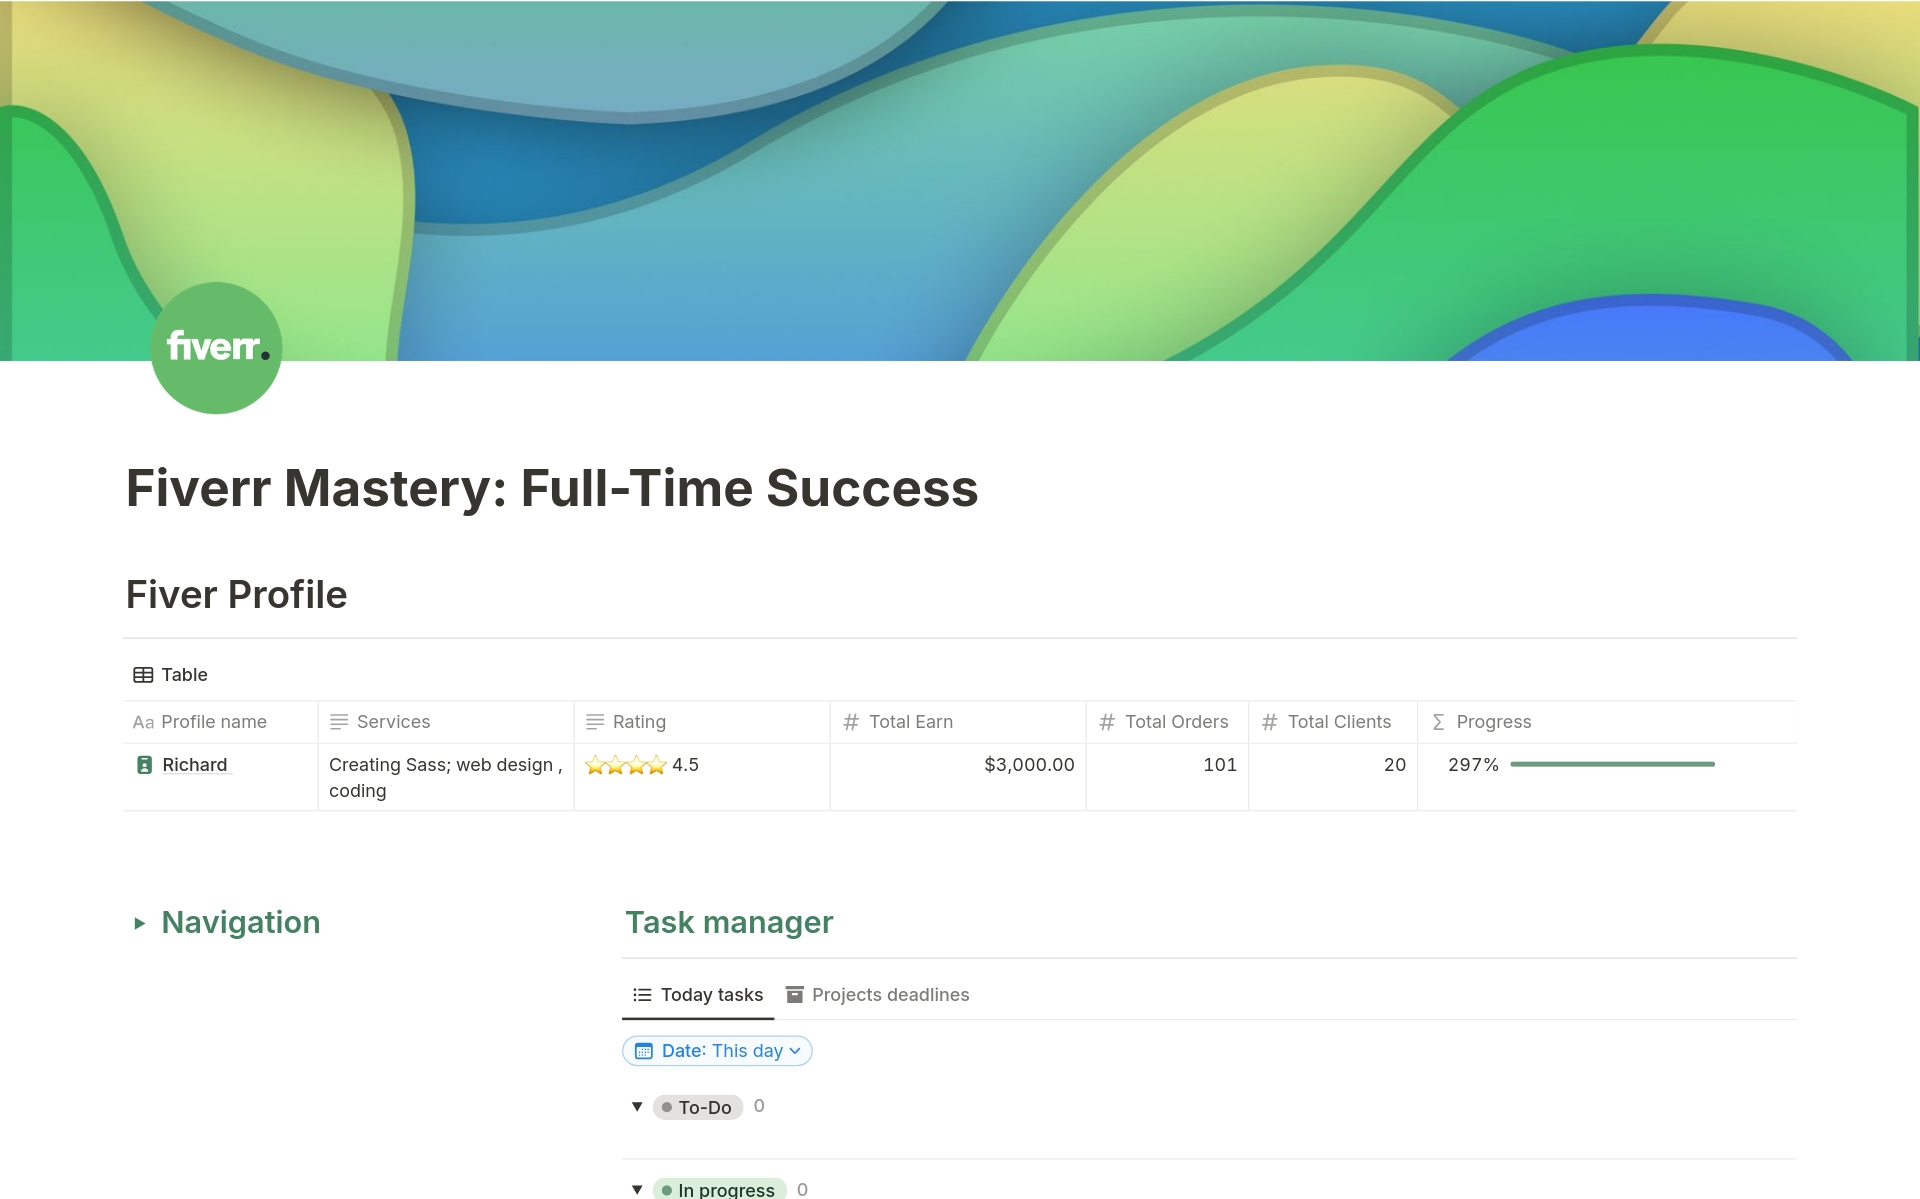 Fiverr Mastery: Full-Time Successのテンプレートのプレビュー